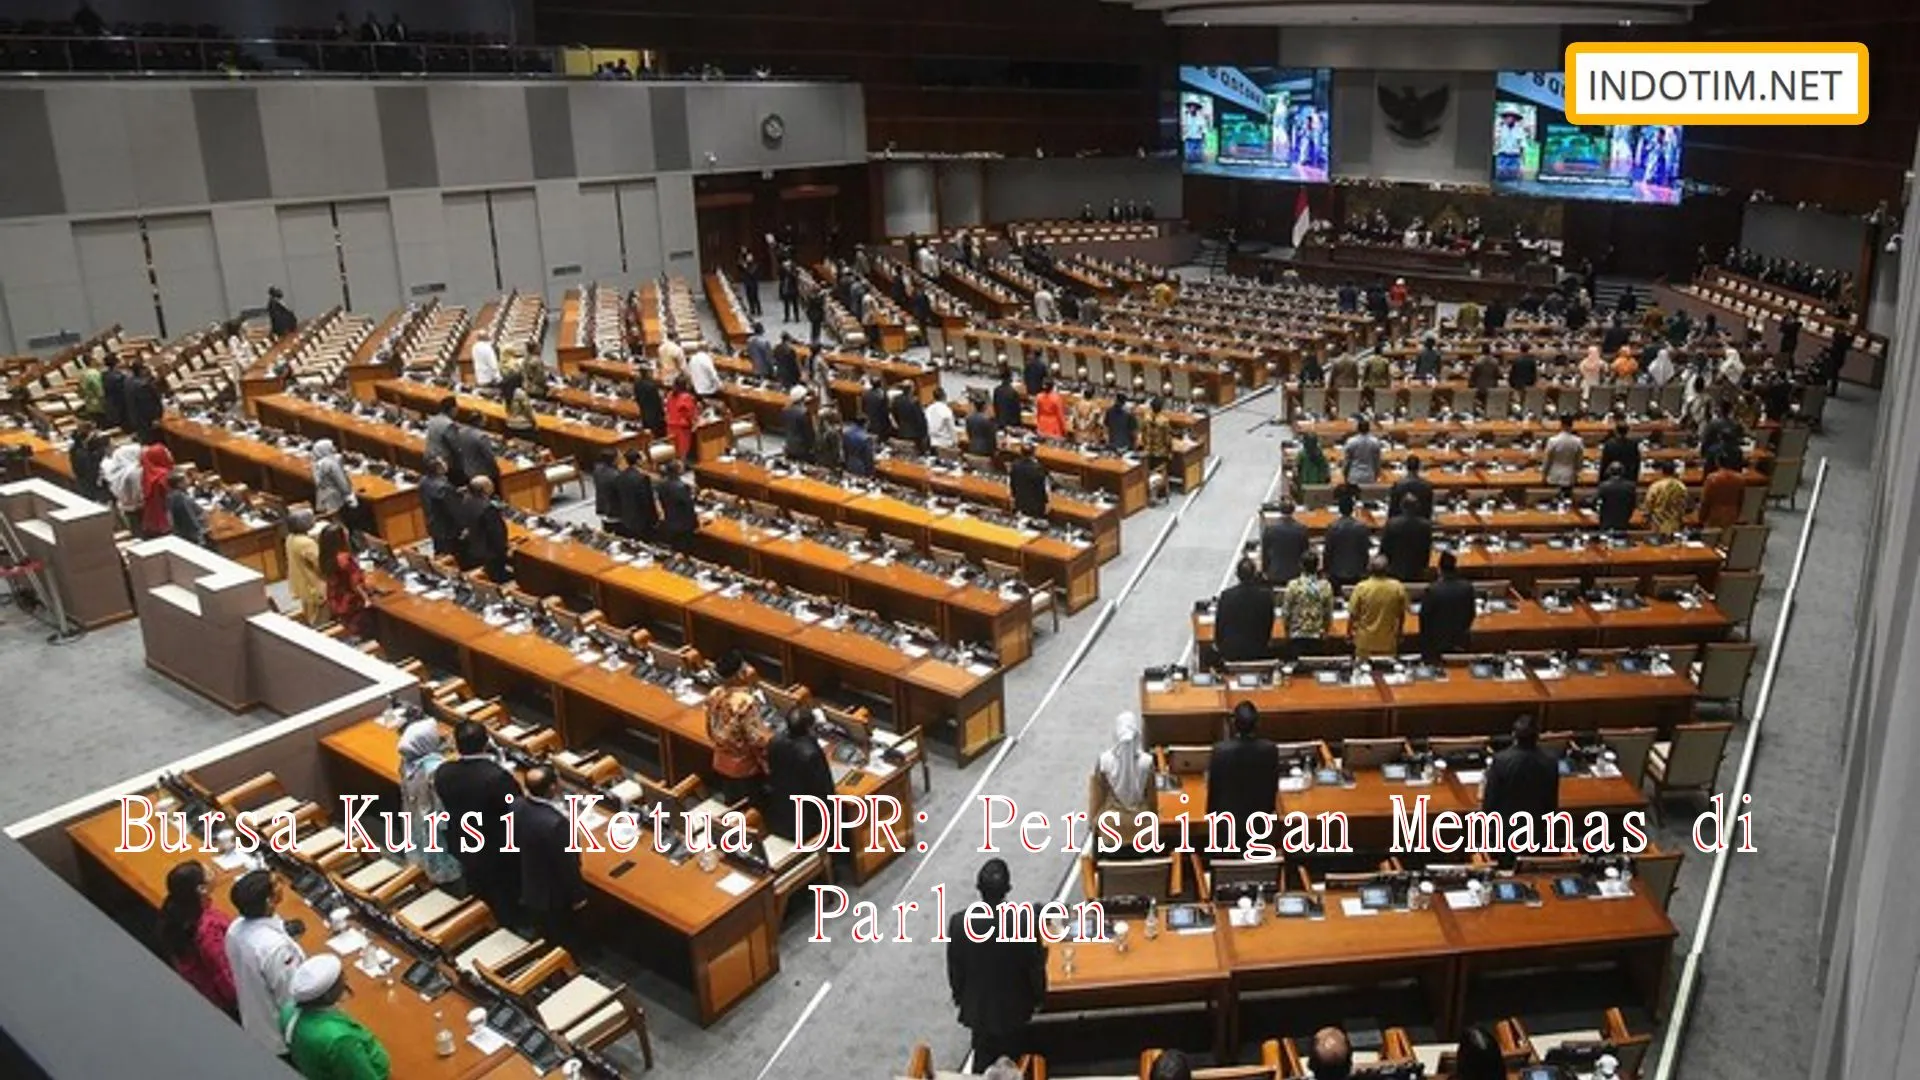 Bursa Kursi Ketua DPR: Persaingan Memanas di Parlemen